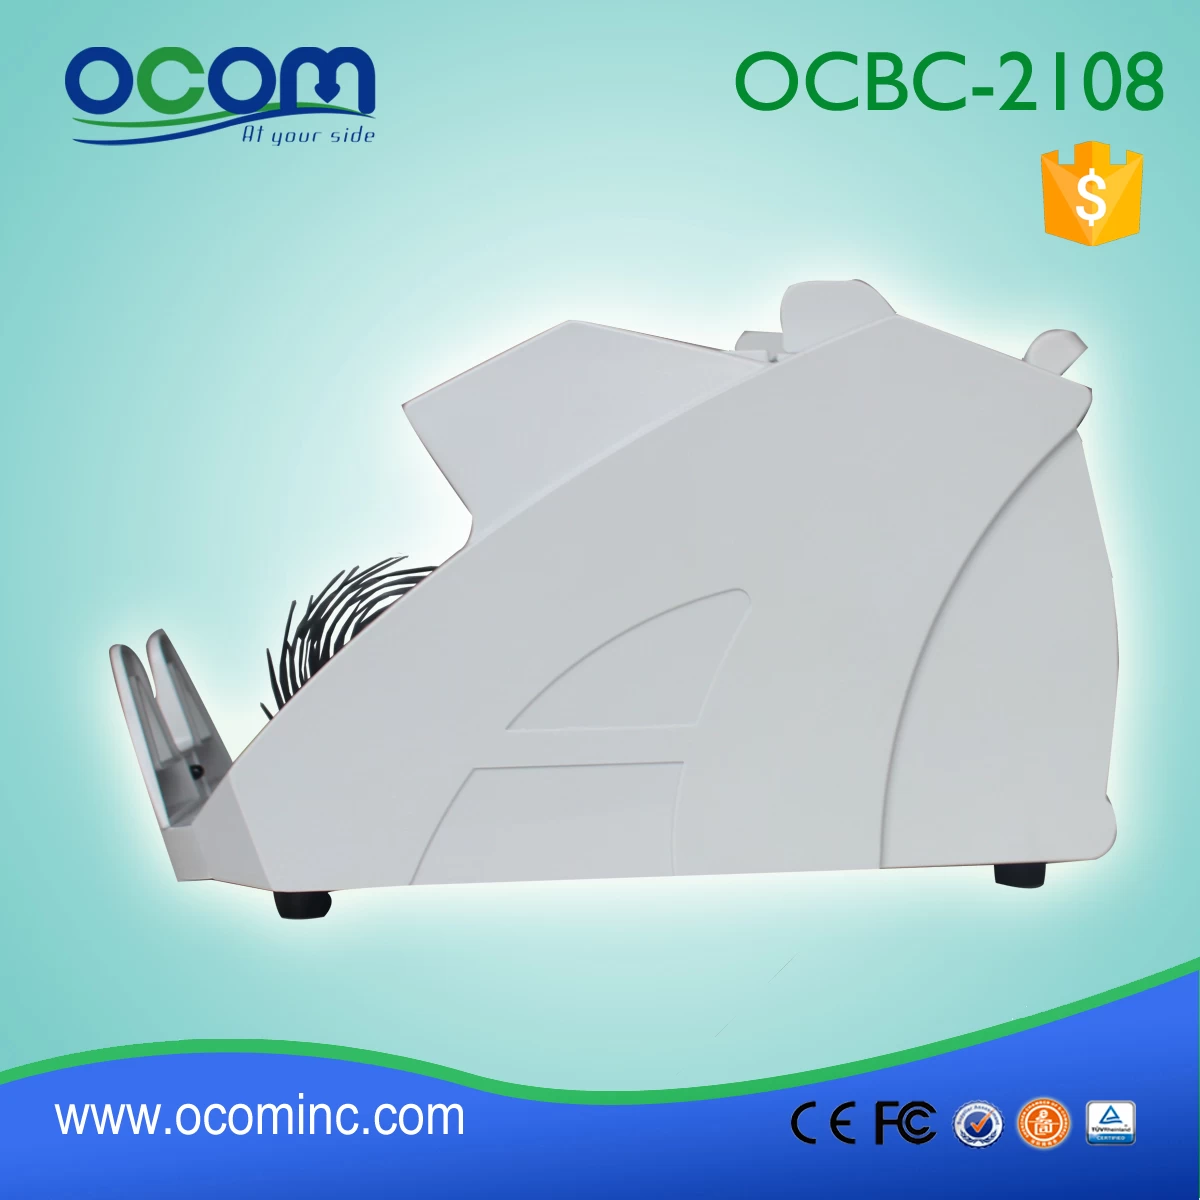 (OCBC-2108)--OCOM made 2016 newest automatic bill counter